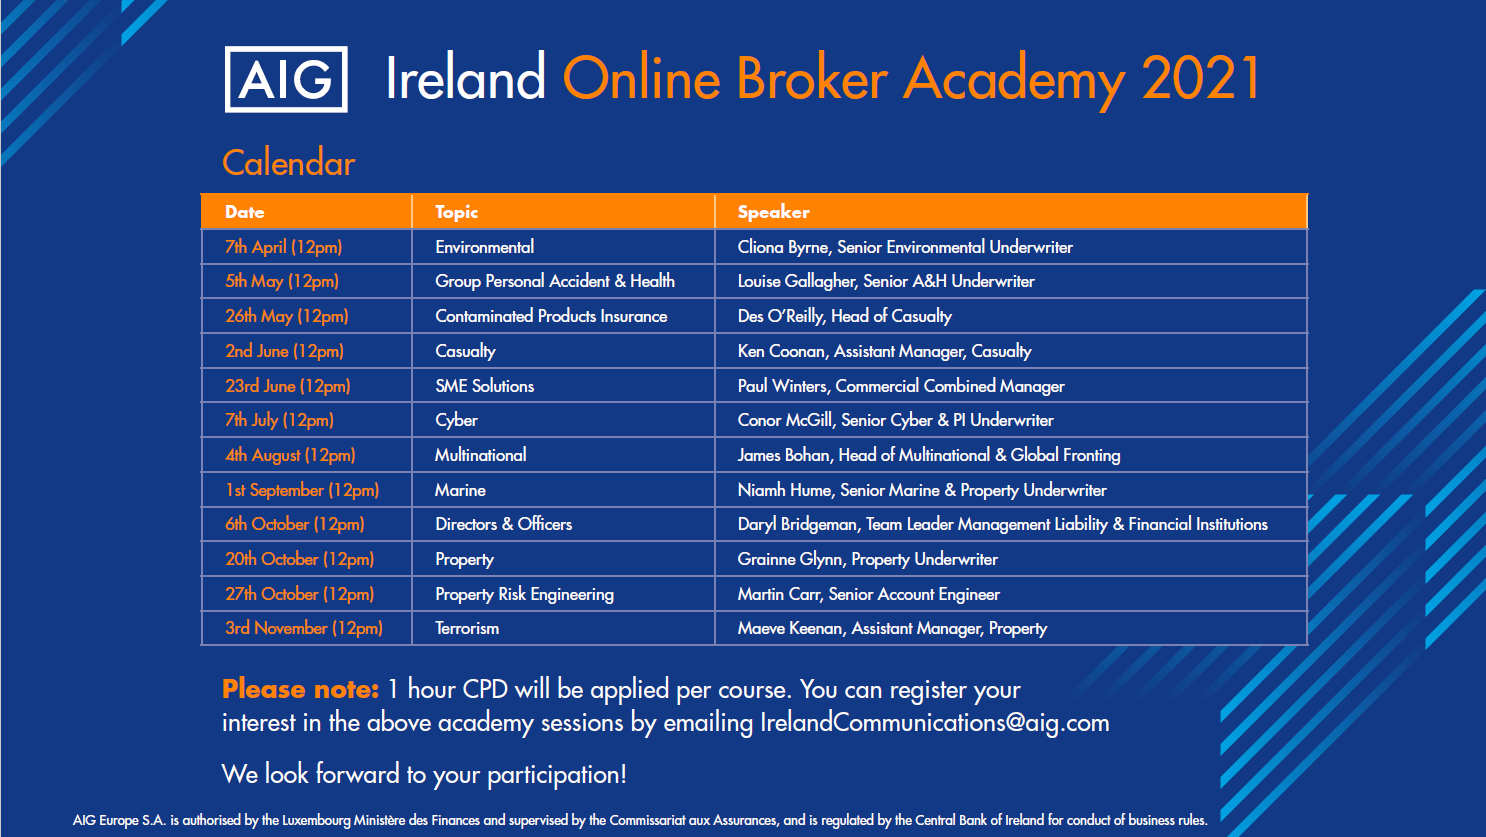 AIG Ireland Online Broker Academy 2021